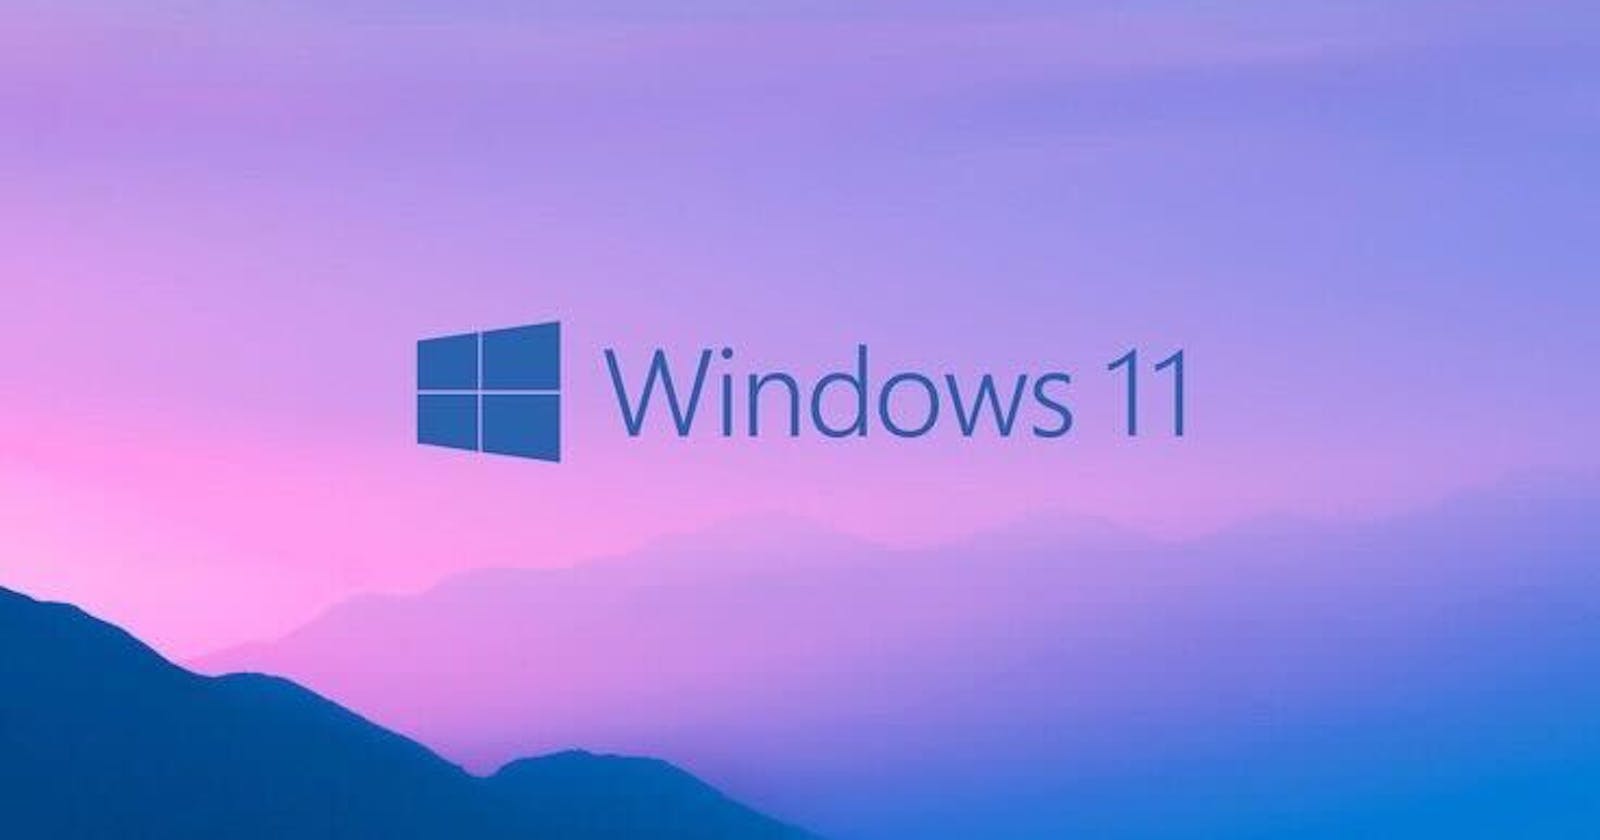 Guide on how to create a Windows 11 pro virtual machine on Microsoft Azure